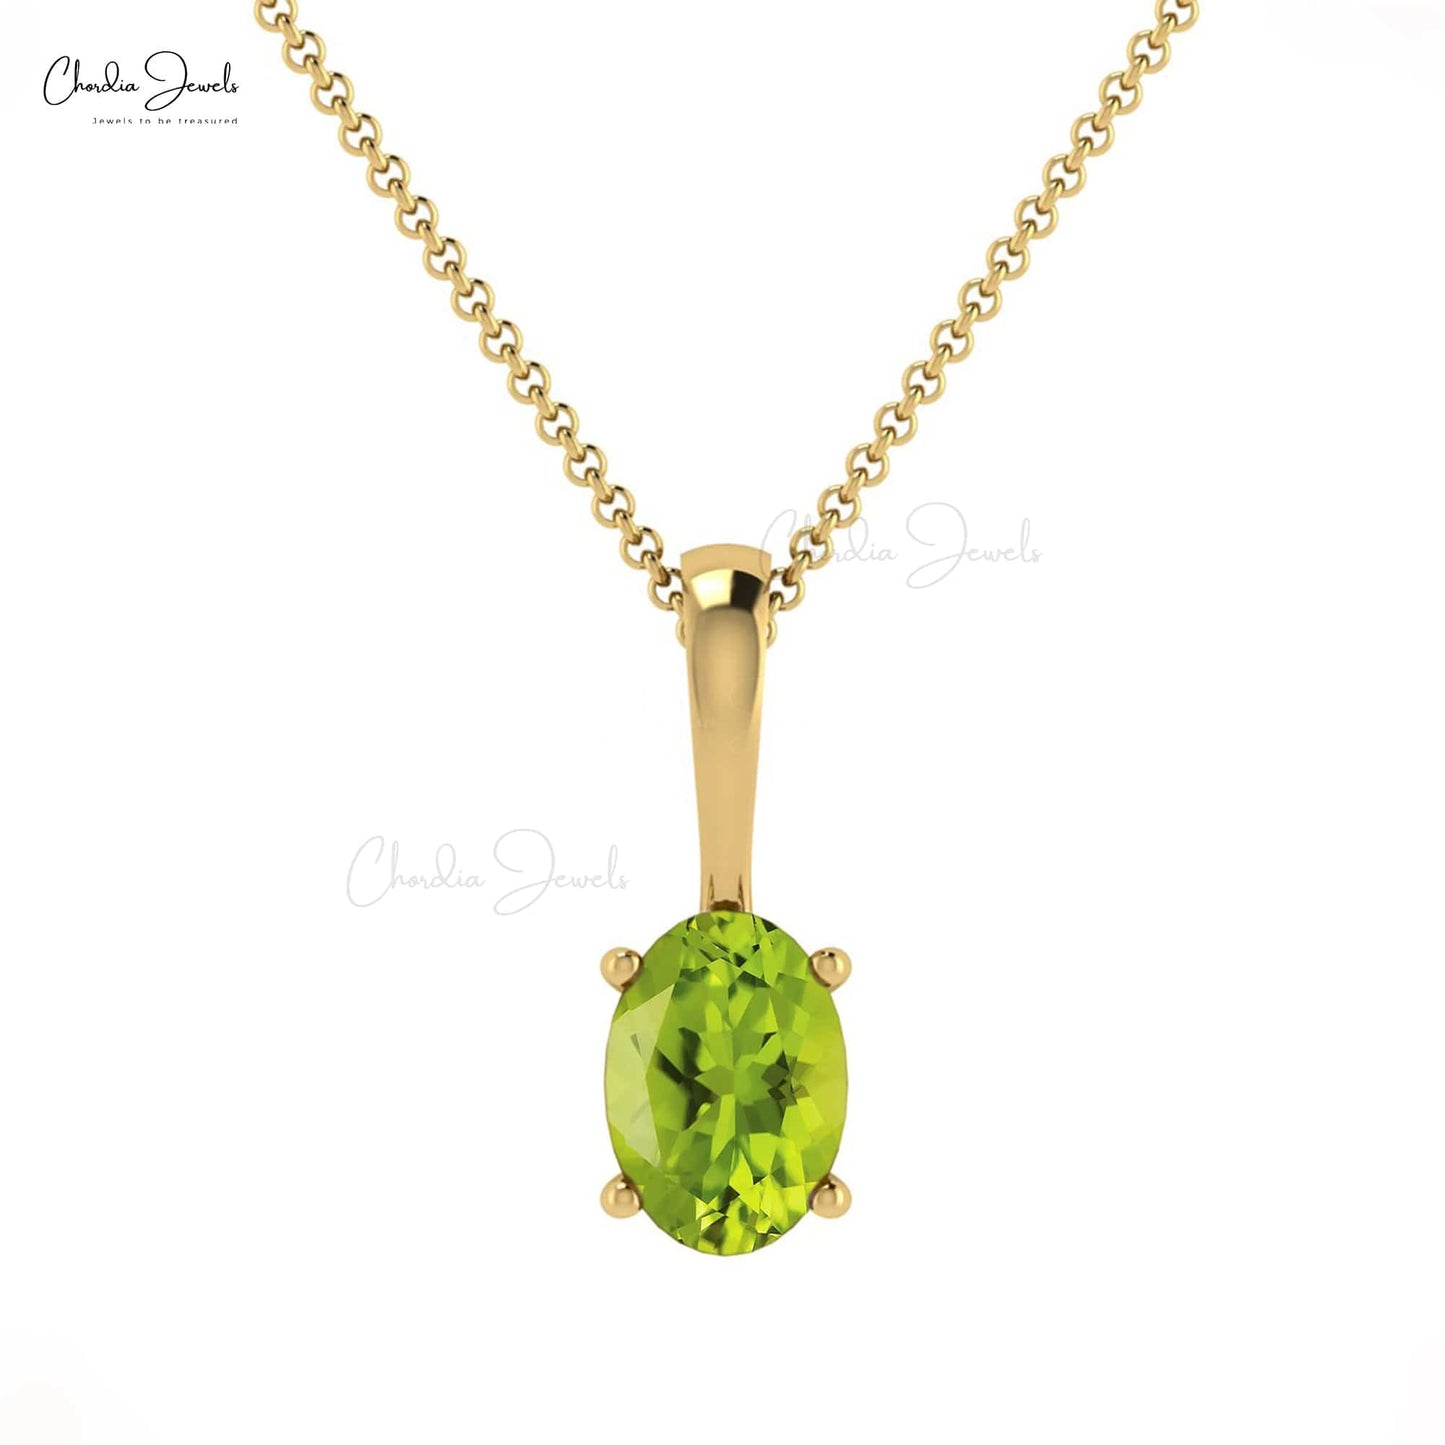 Oval Cut 0.55Ct Genuine Peridot Gemstone Solitaire Pendant 14k Real Gold Hallmark Jewelry